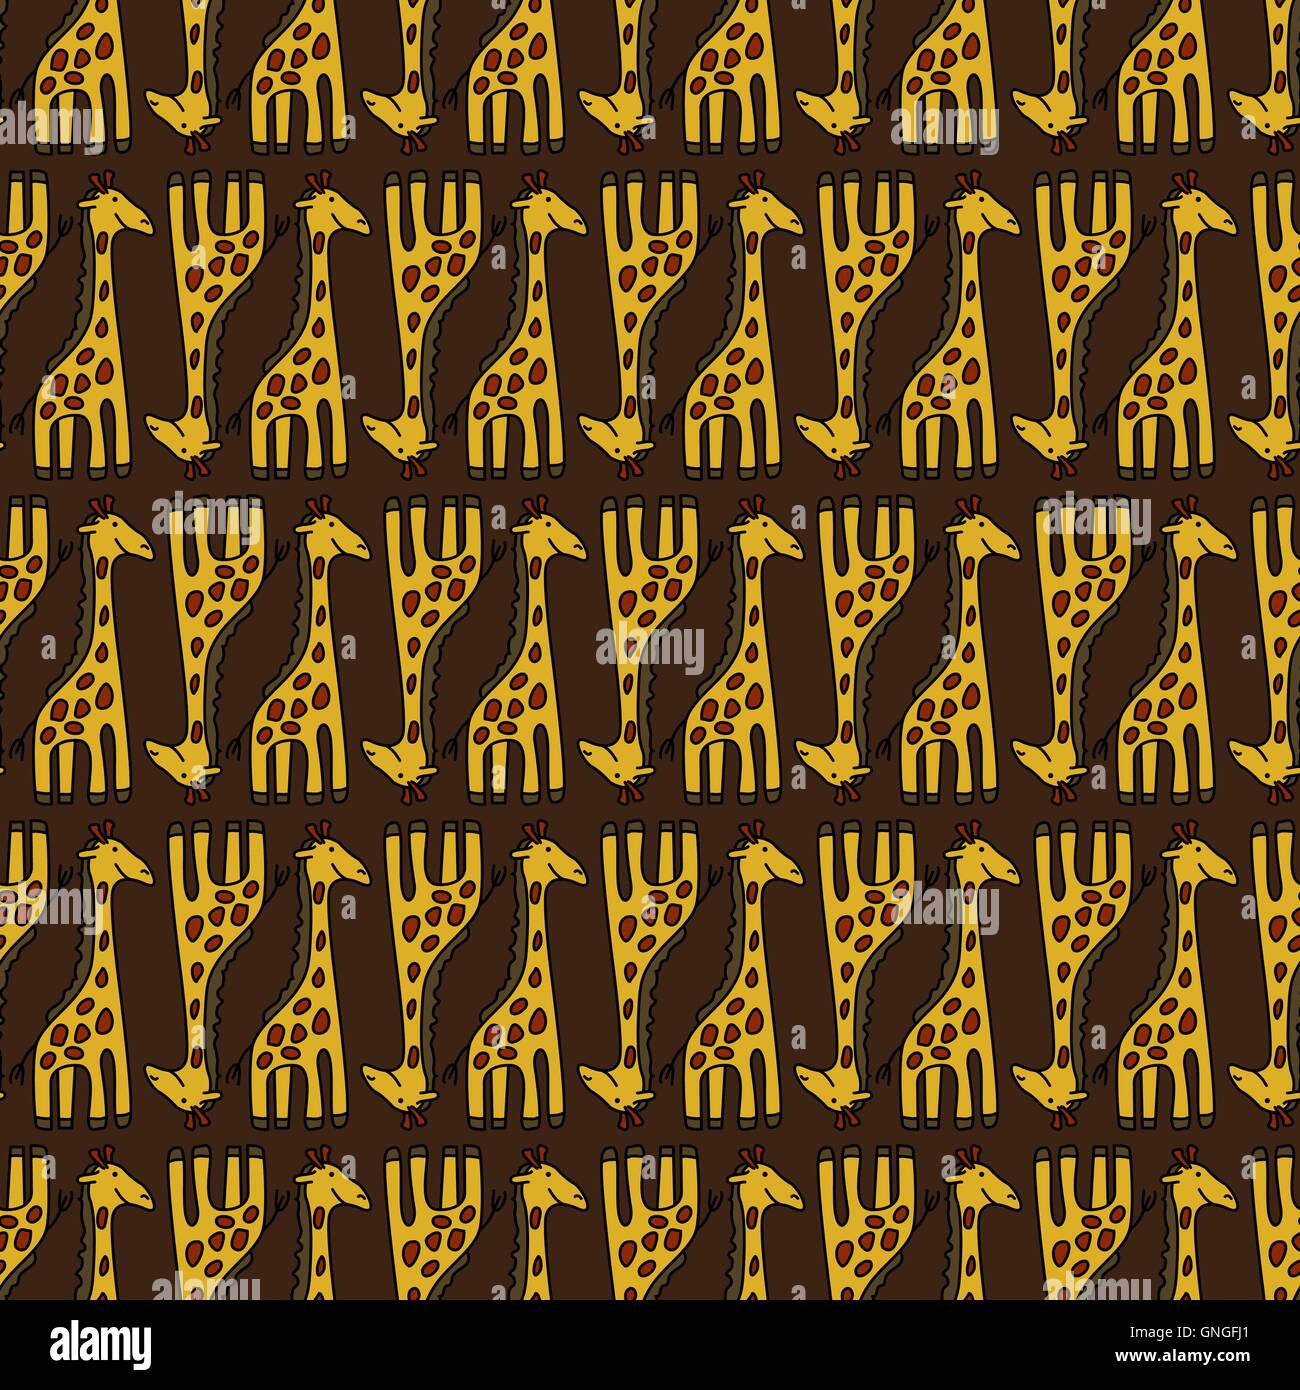 Seamless giraffe pattern Stock Vector